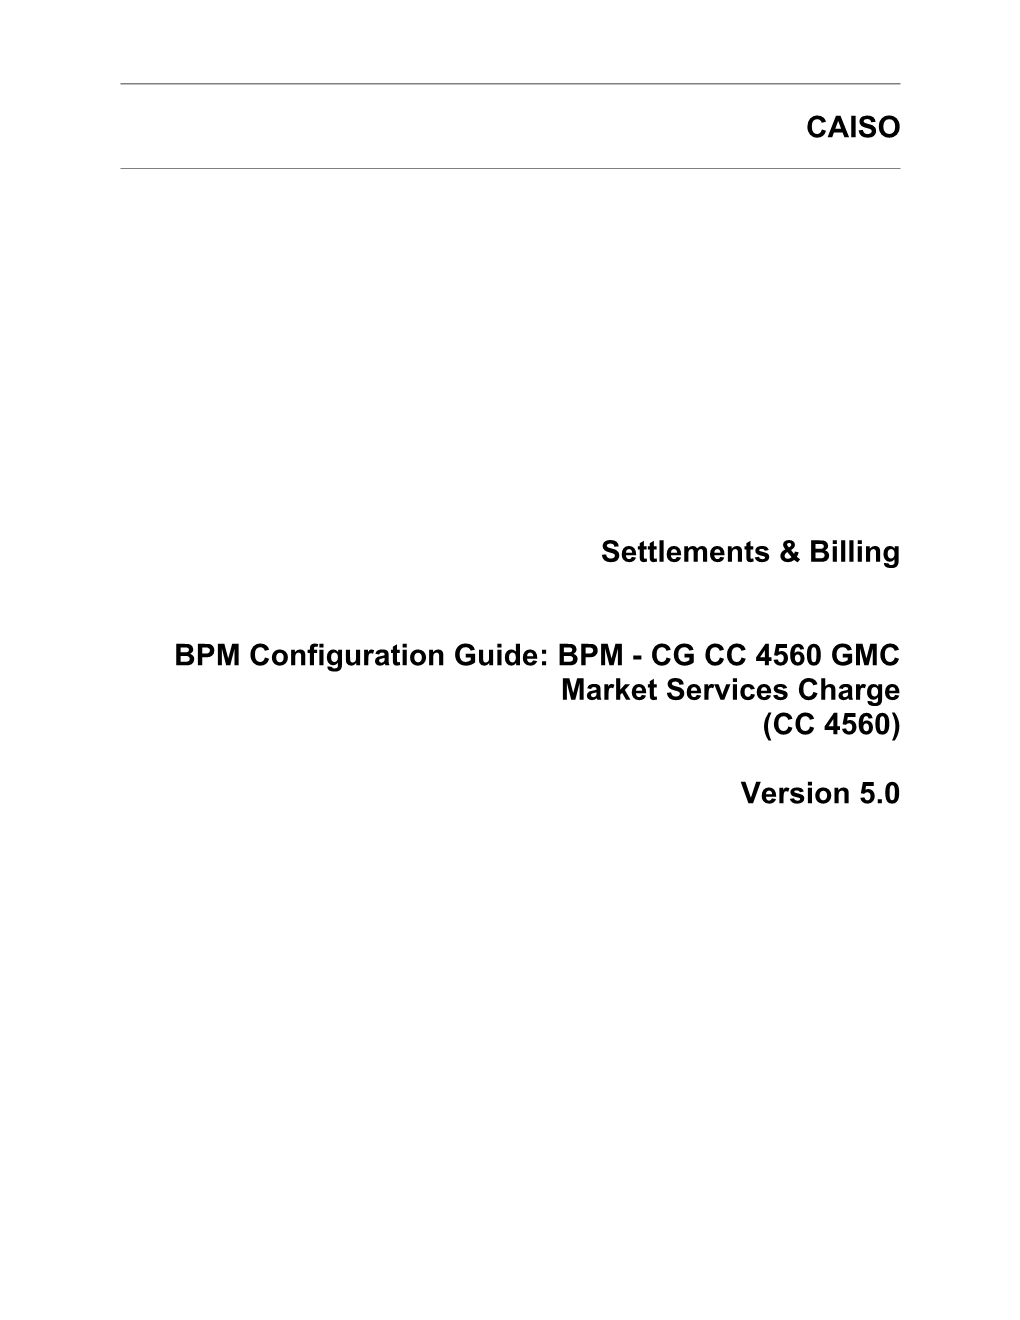 BPM - CG CC 4560 GMC Market Services Charge